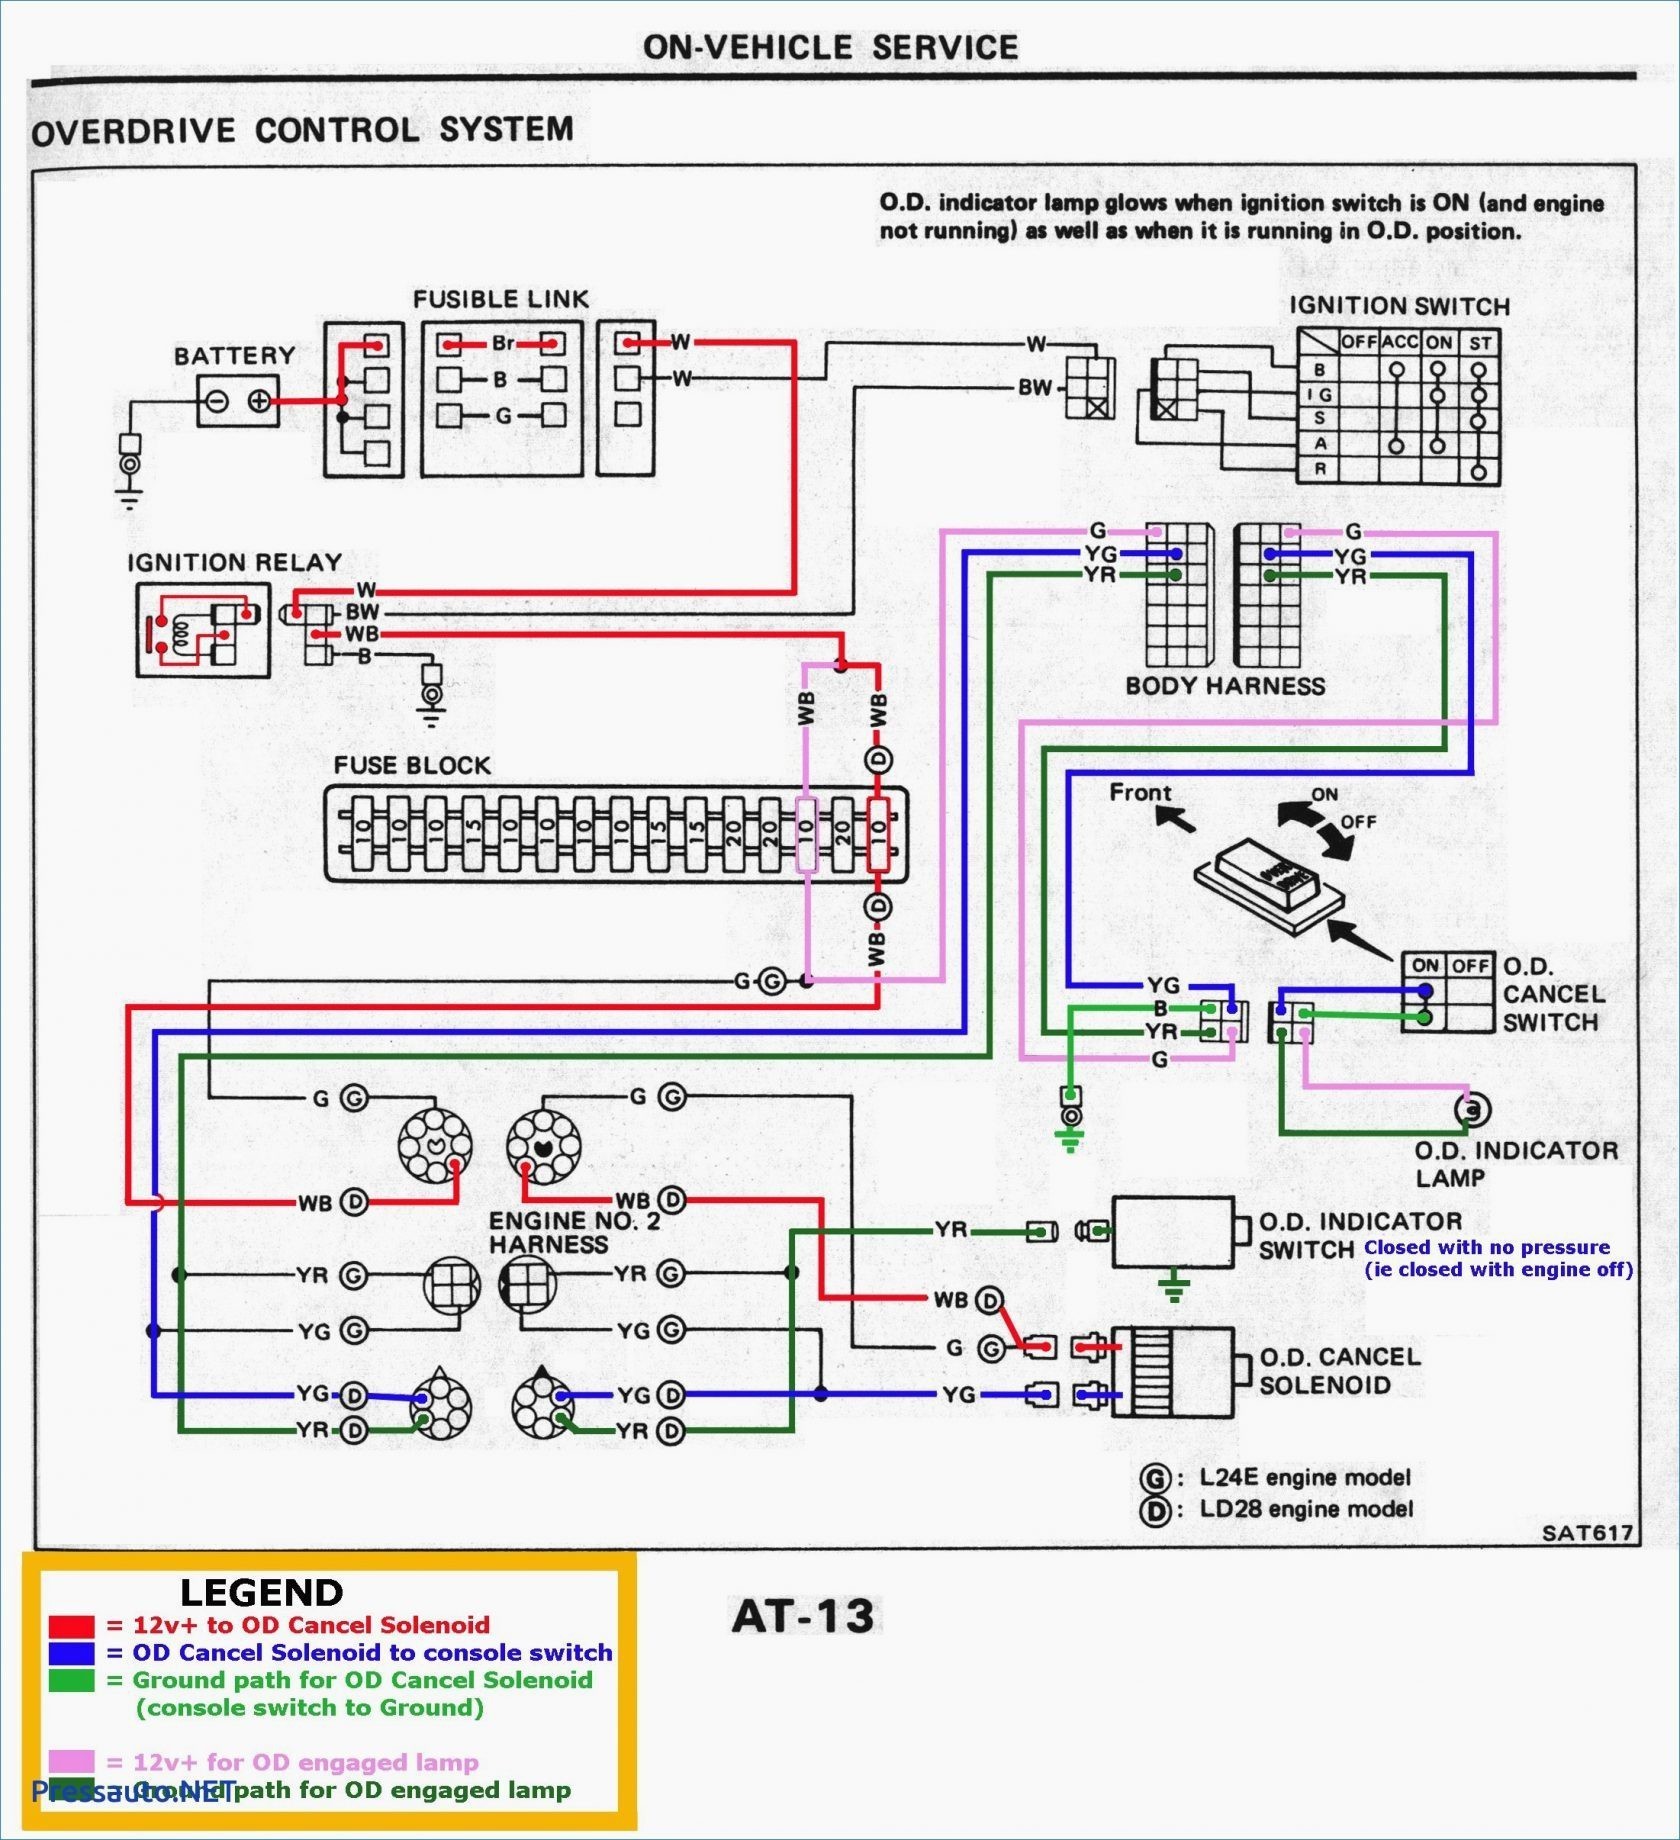 Car Ignition Wiring Diagram Rv Ignition Wiring Harness Diagram Wiring Diagram Inside Of Car Ignition Wiring Diagram